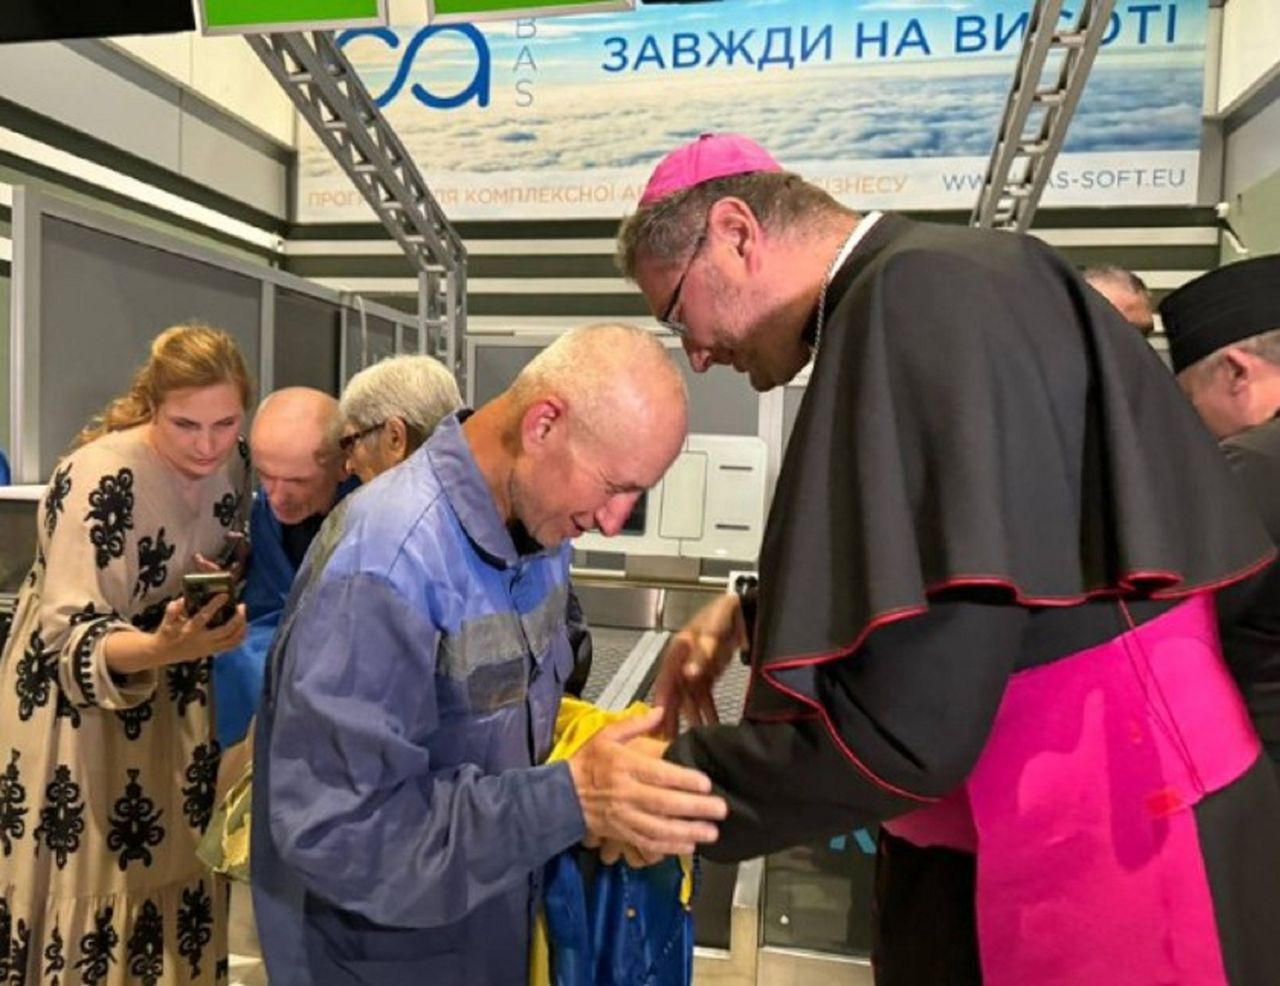 Ukrainian priests and Tatars among freed in latest prisoner exchange